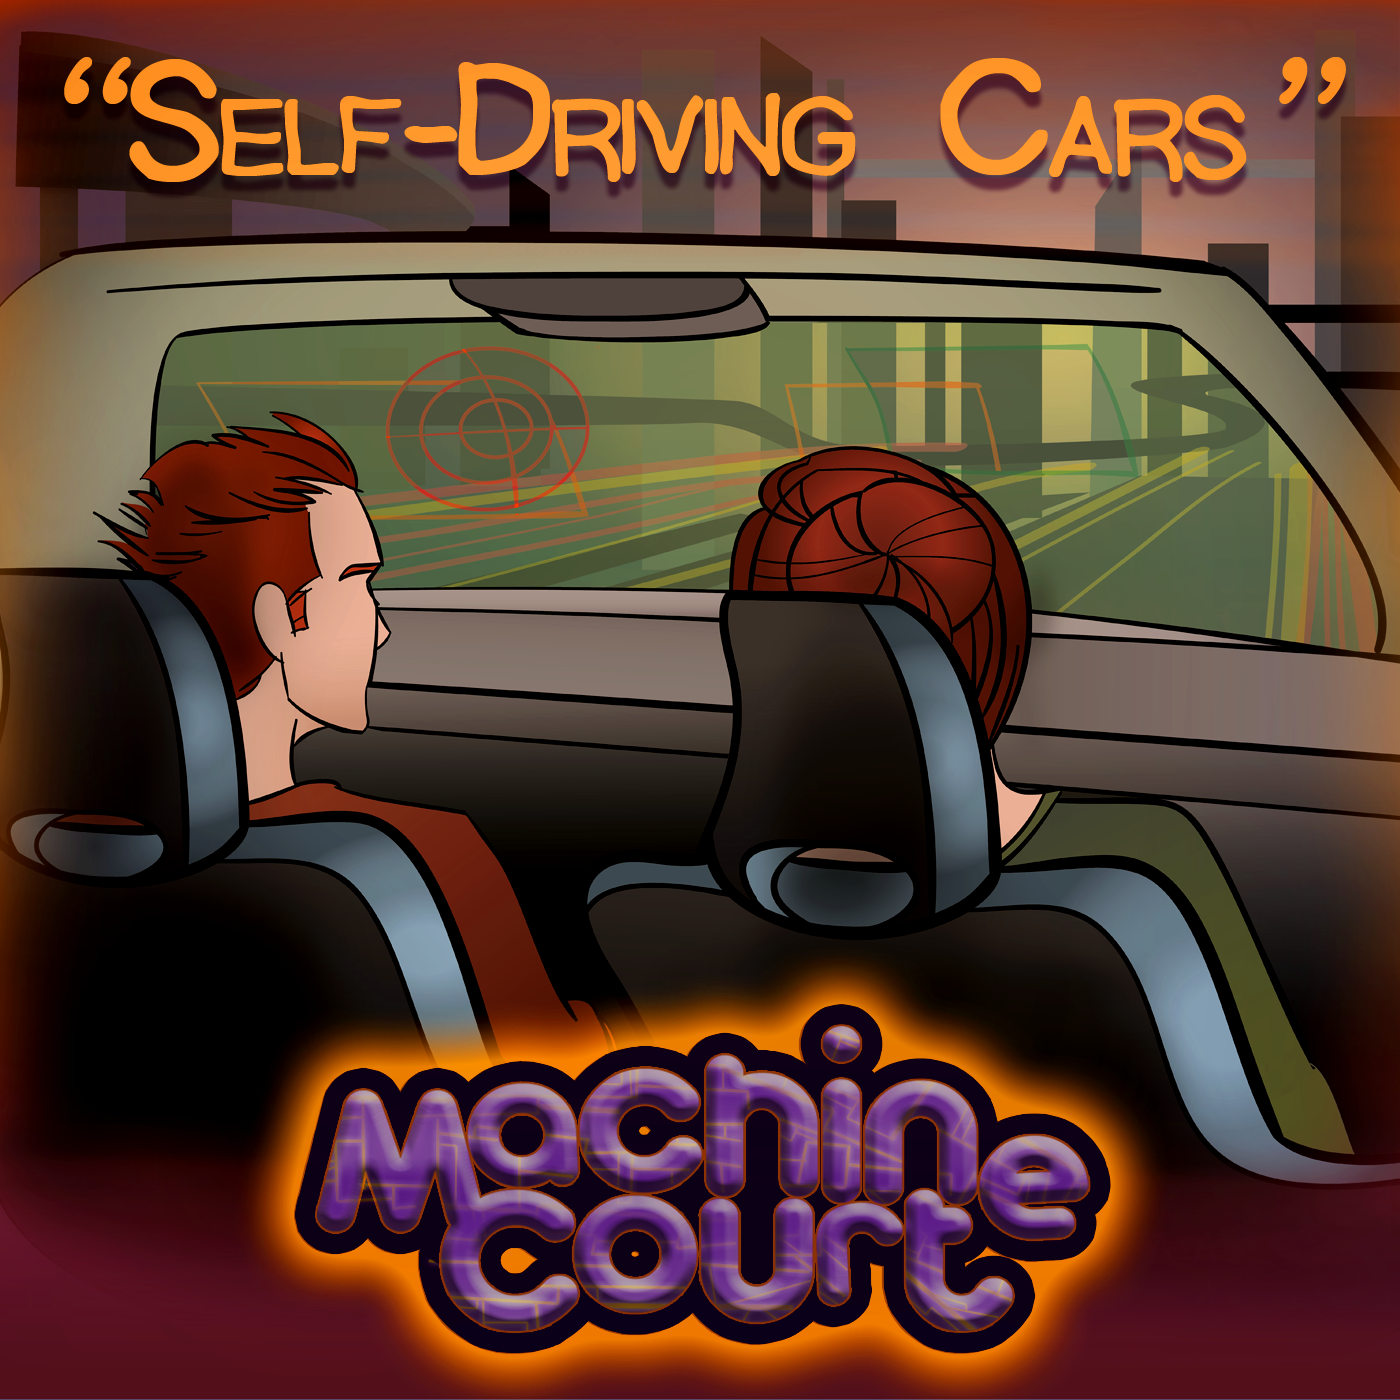 2.10 “Self-Driving Cars”